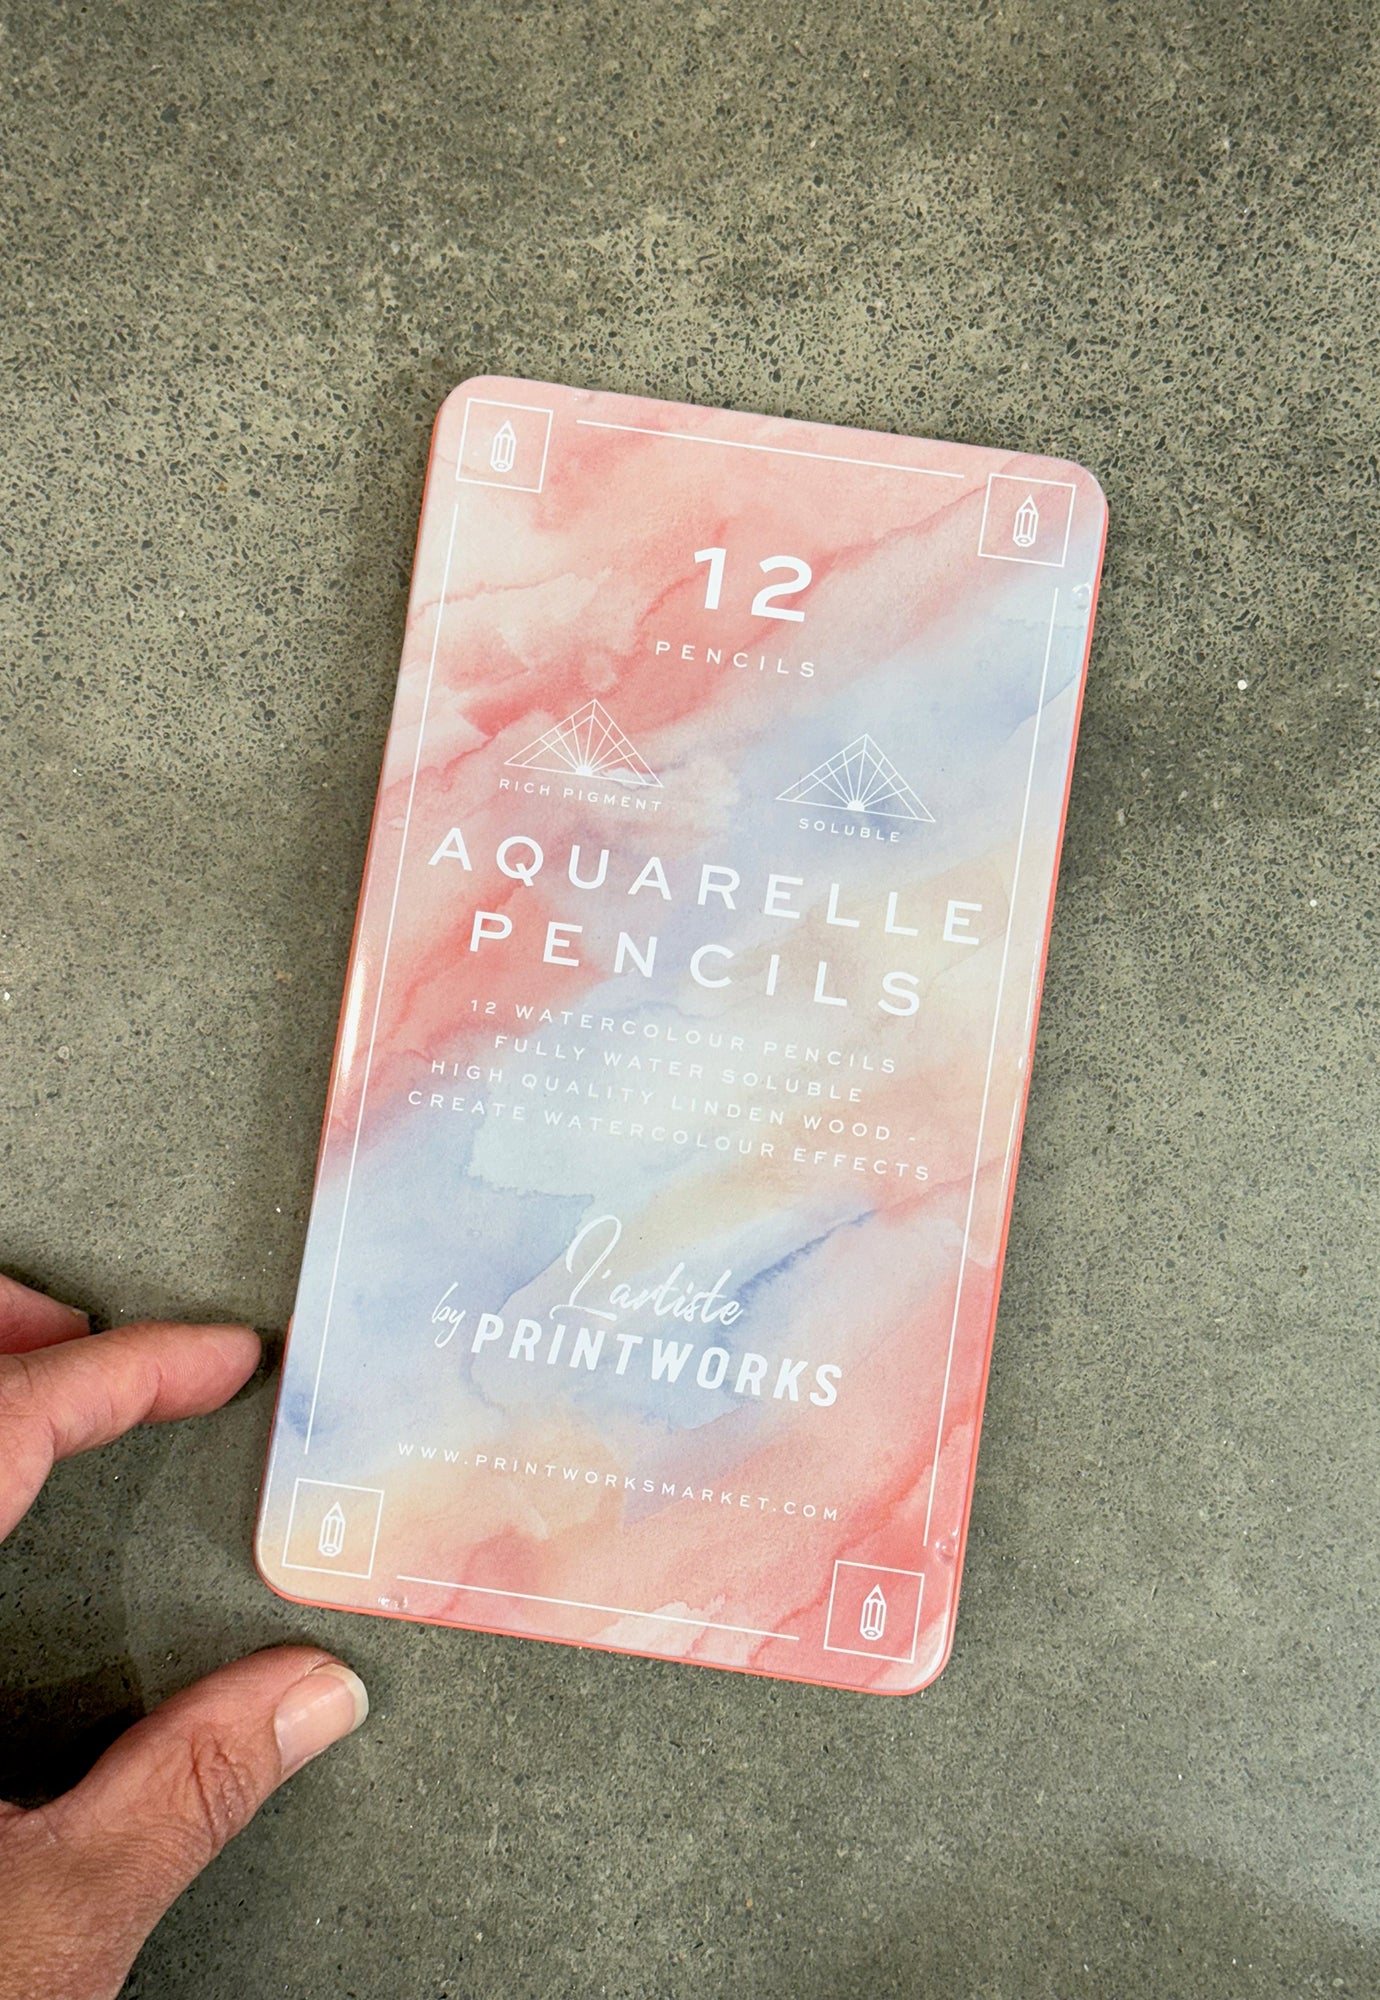 printworks - aquarelle pencils